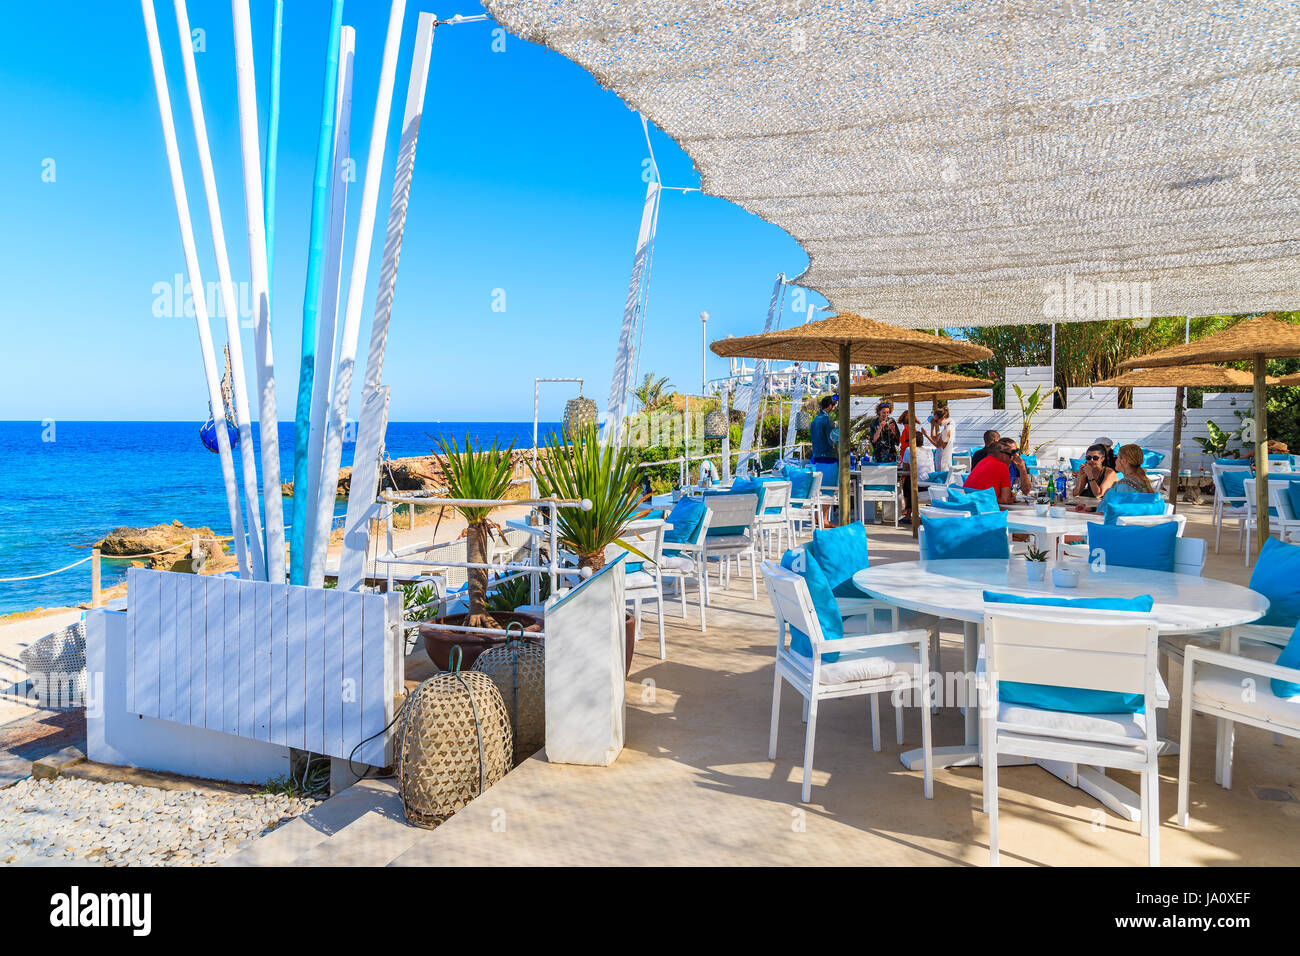 Insel IBIZA, Spanien - 20. Mai 2017: Tabellen in Cala Nova Strandrestaurant und Blick aufs Meer, Insel Ibiza, Spanien. Stockfoto